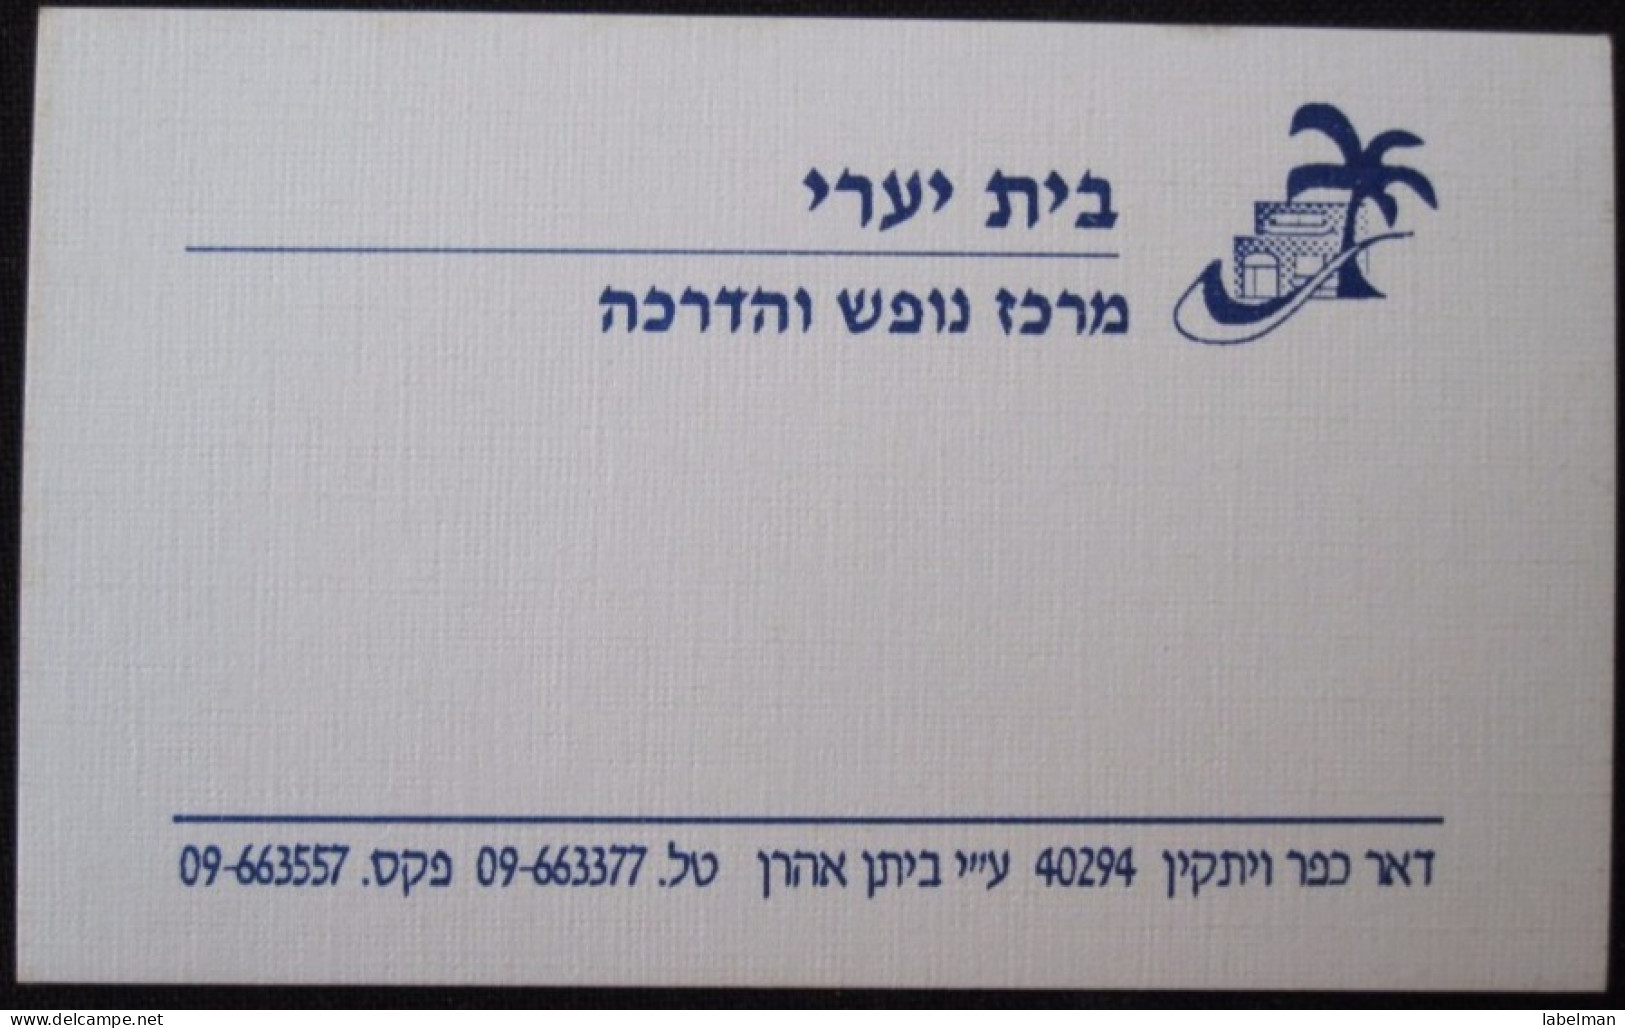 HOTEL REST HOUSE YAARI KUPAT HOLIM NETANYA ORIGINAL VINTAGE CARD BROCHURE PALESTINE POST STAMP LETTER ENVELOPE ISRAEL - Hotel Labels